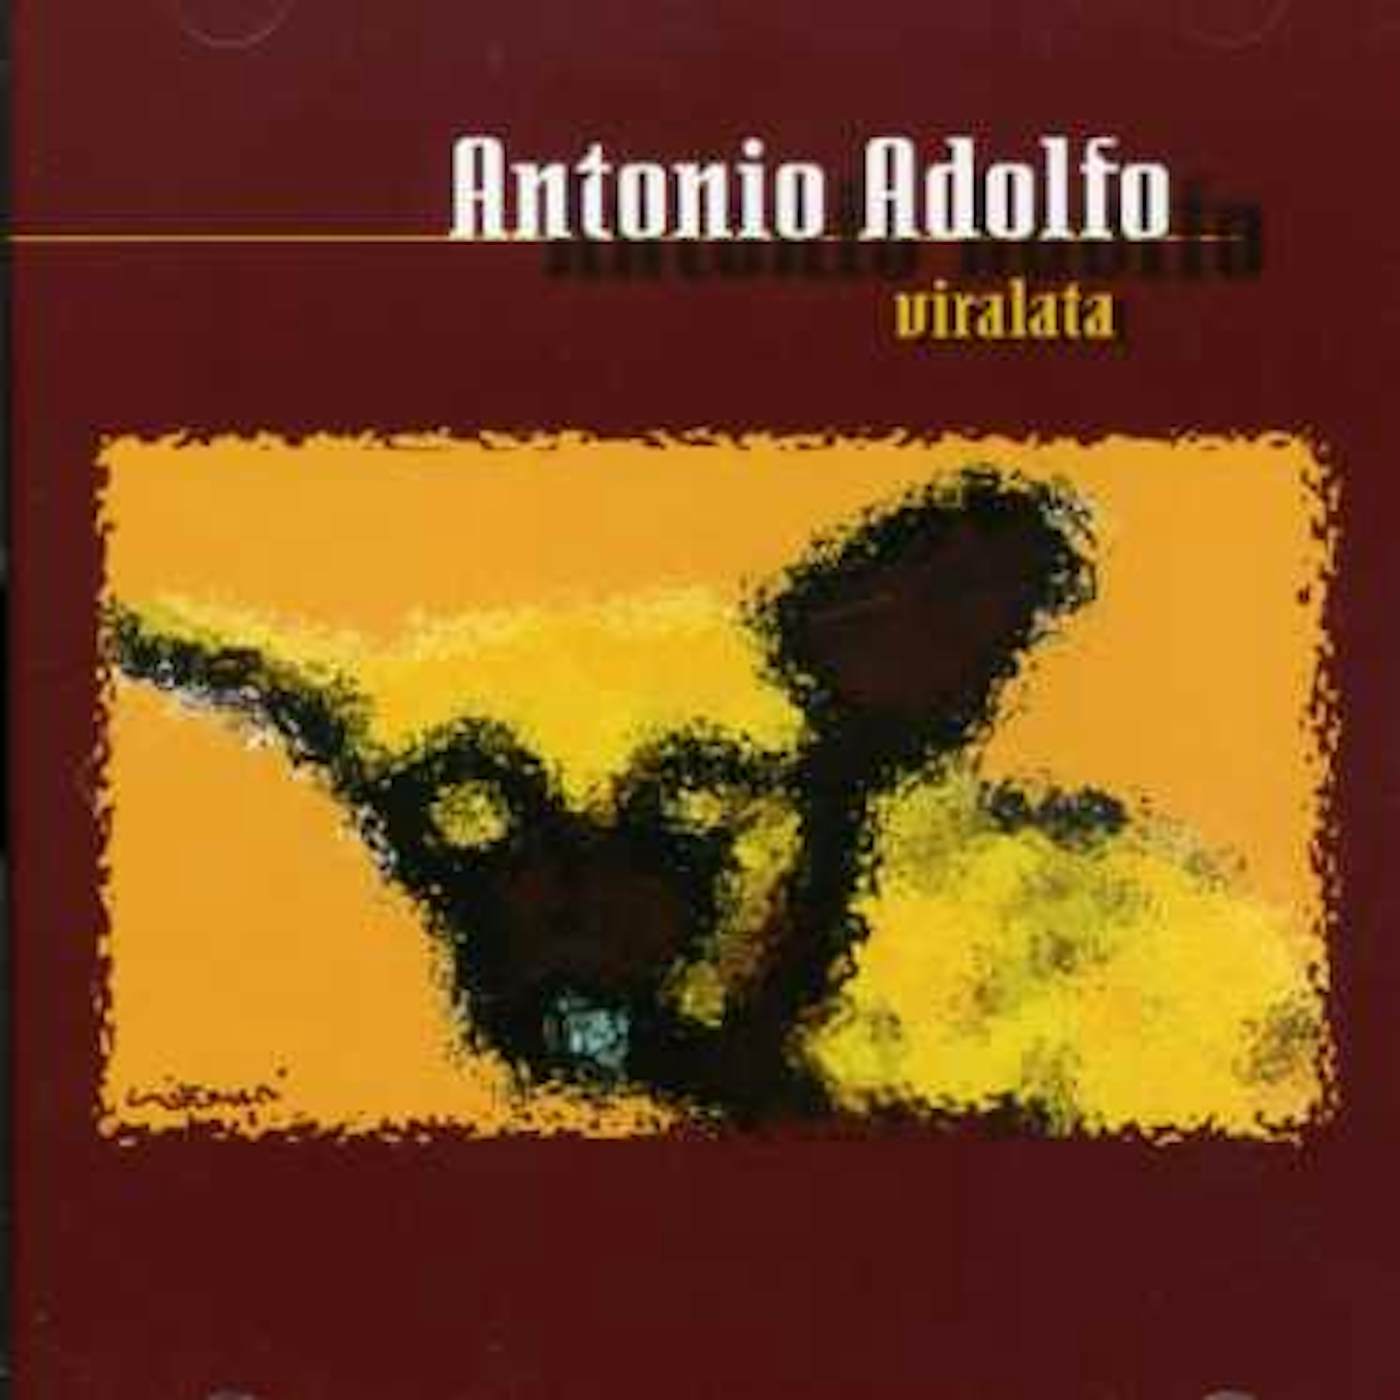 Antonio Adolfo VIRALATA CD